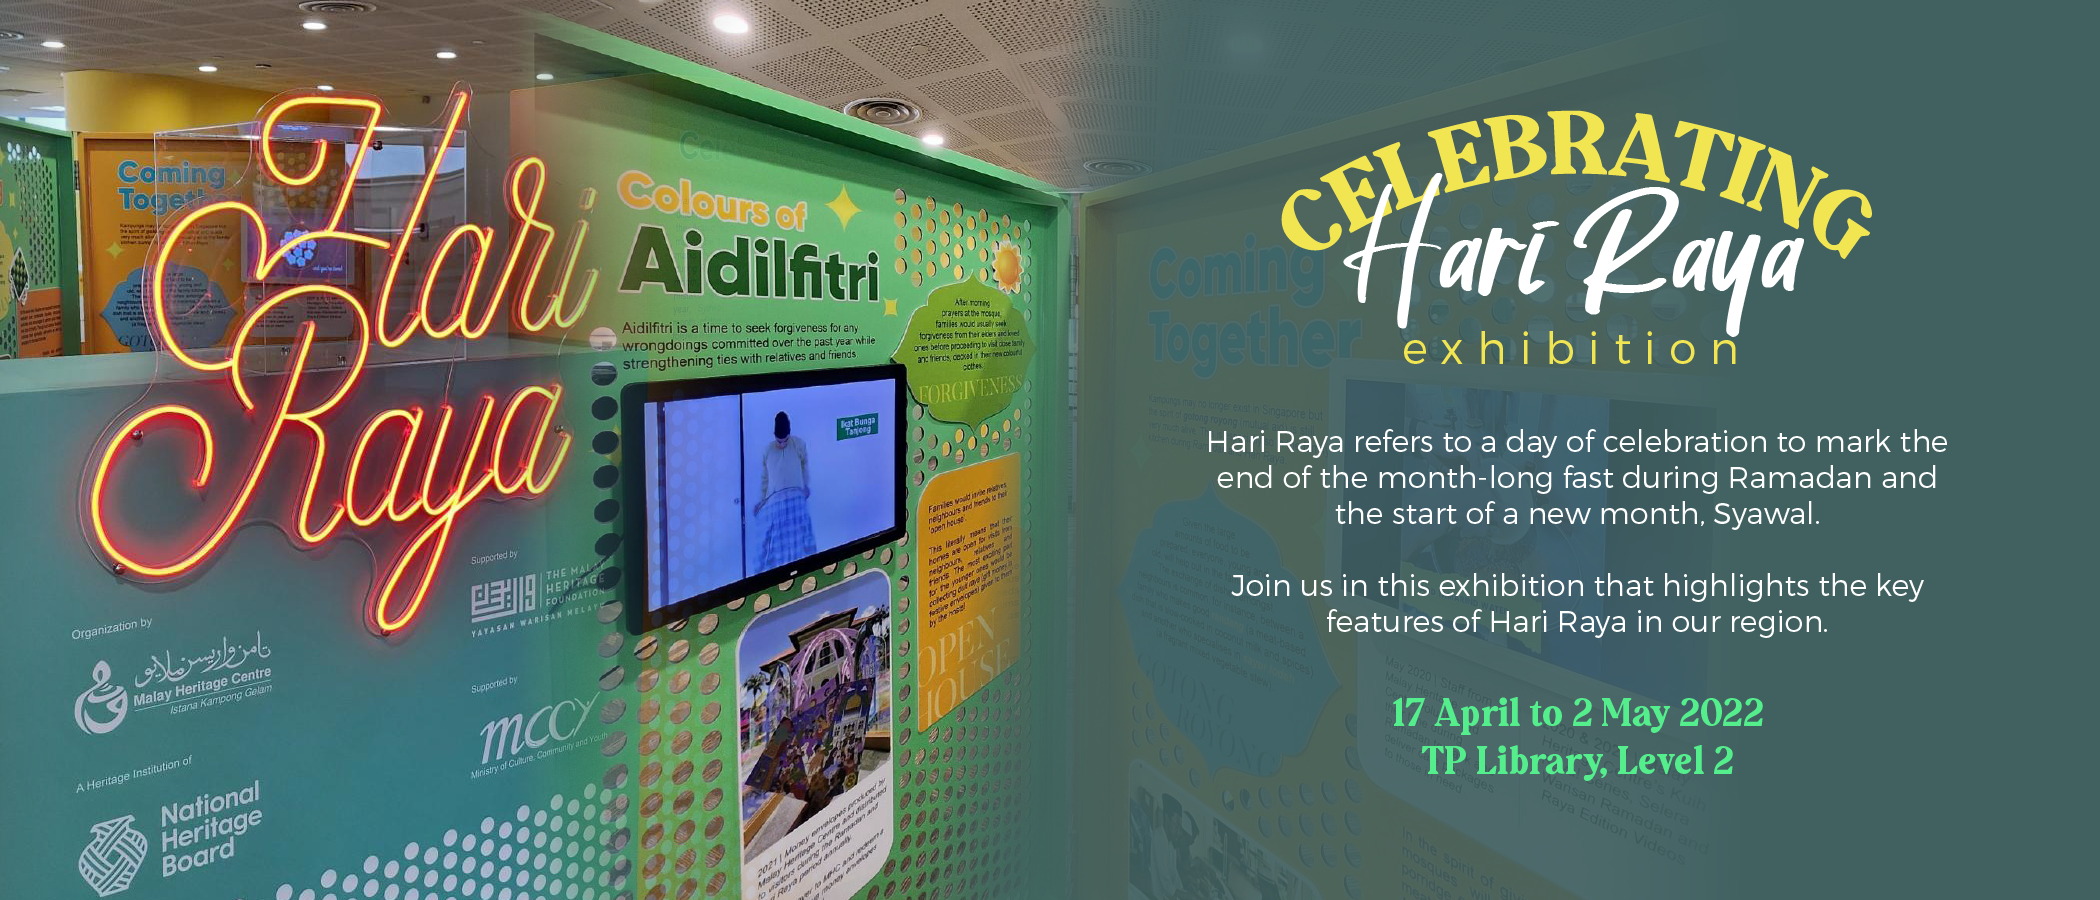 Celebrating Hari Raya Exhibition